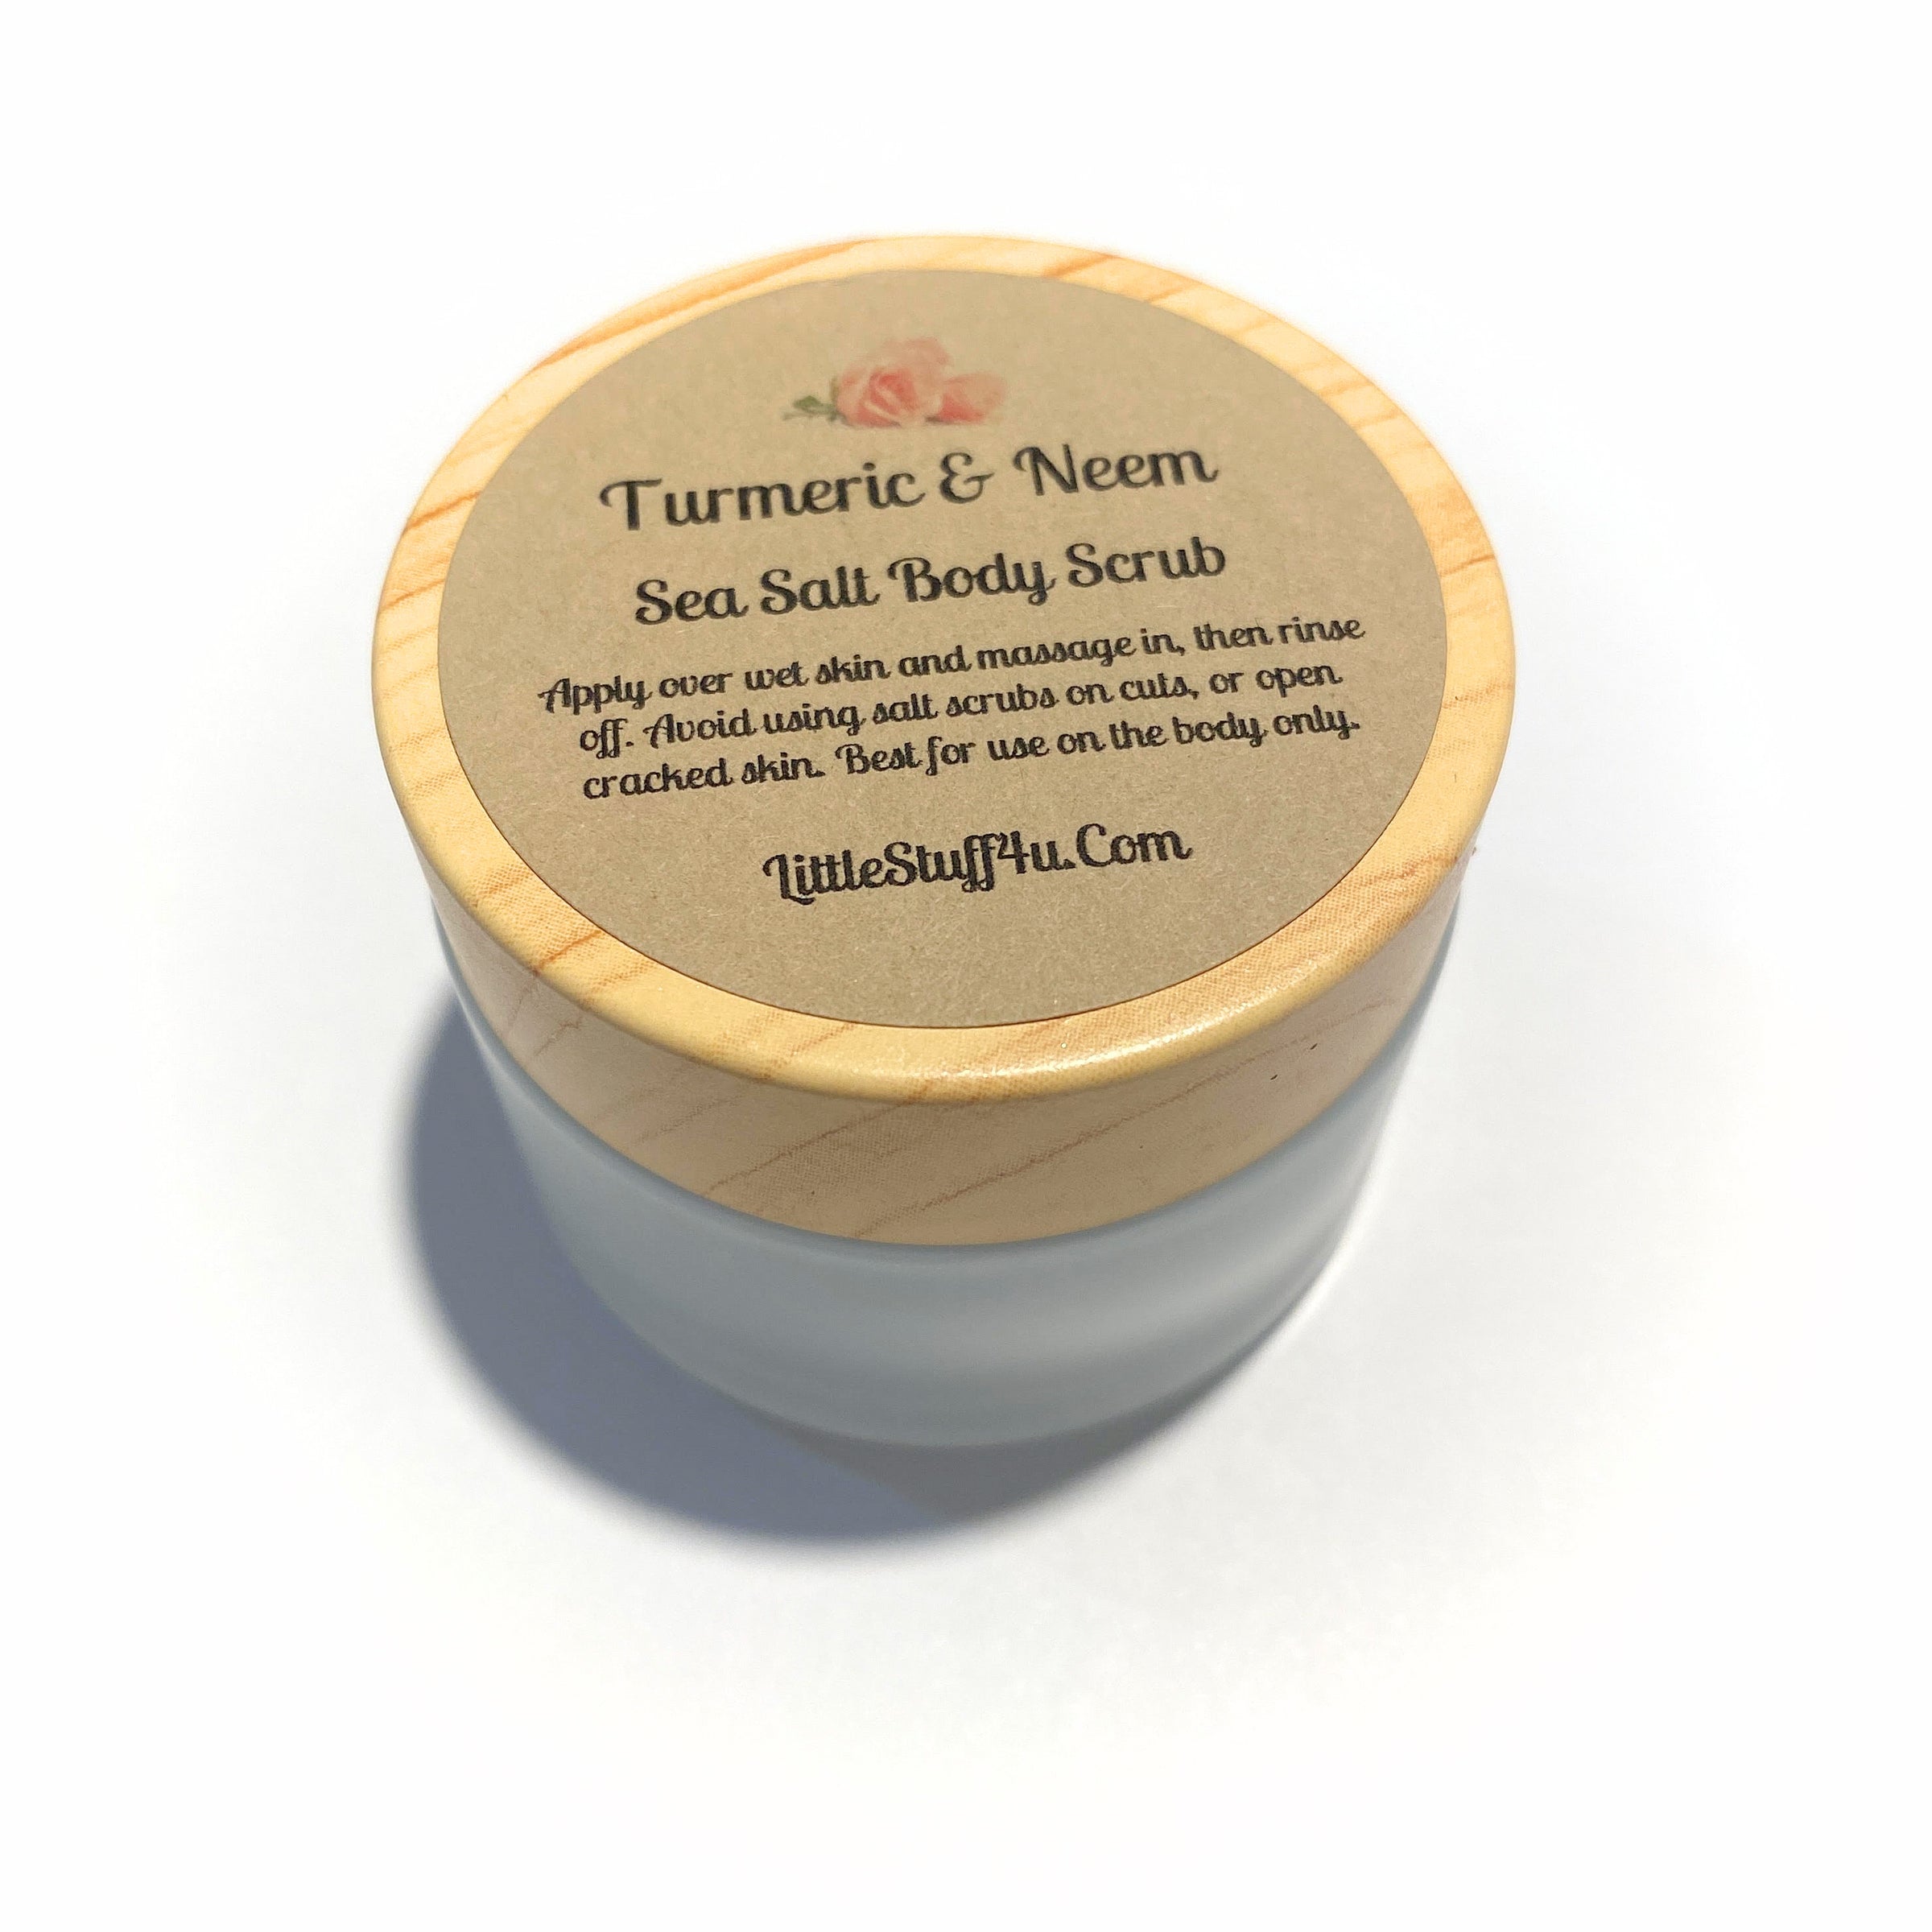 Turmeric & Neem Sea Salt Body Scrub